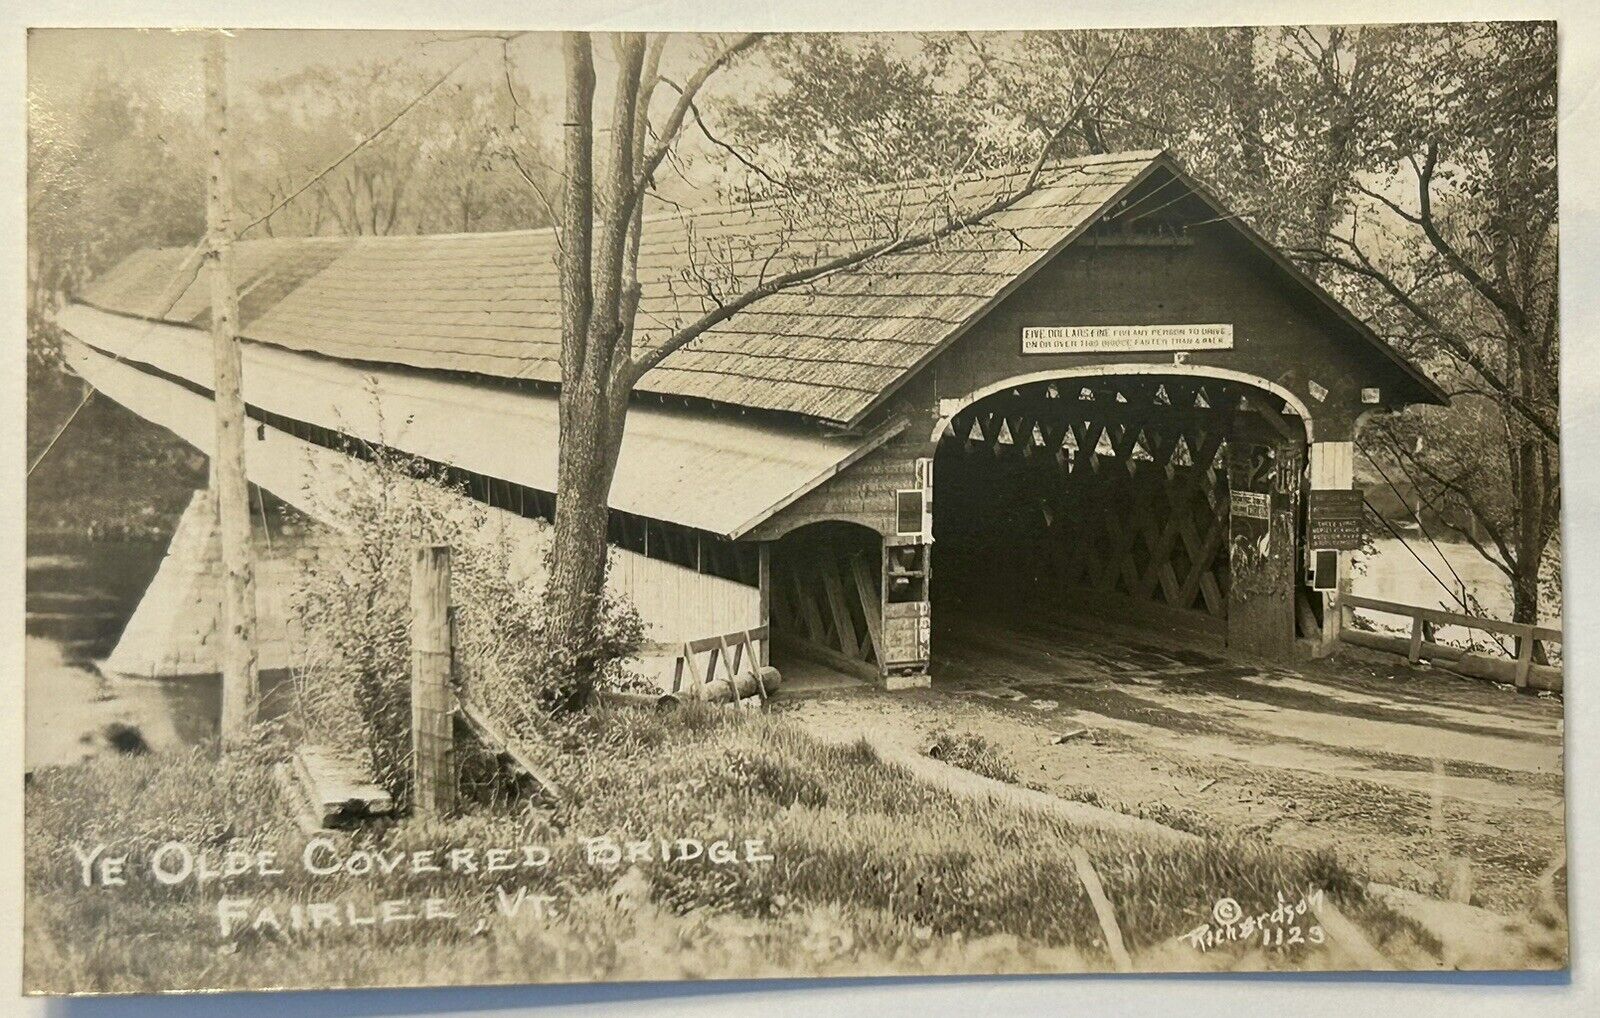 Te Older Covered Bridge. Fairlee VT Real Photo Postcard. RPPC. H.W. Richardson